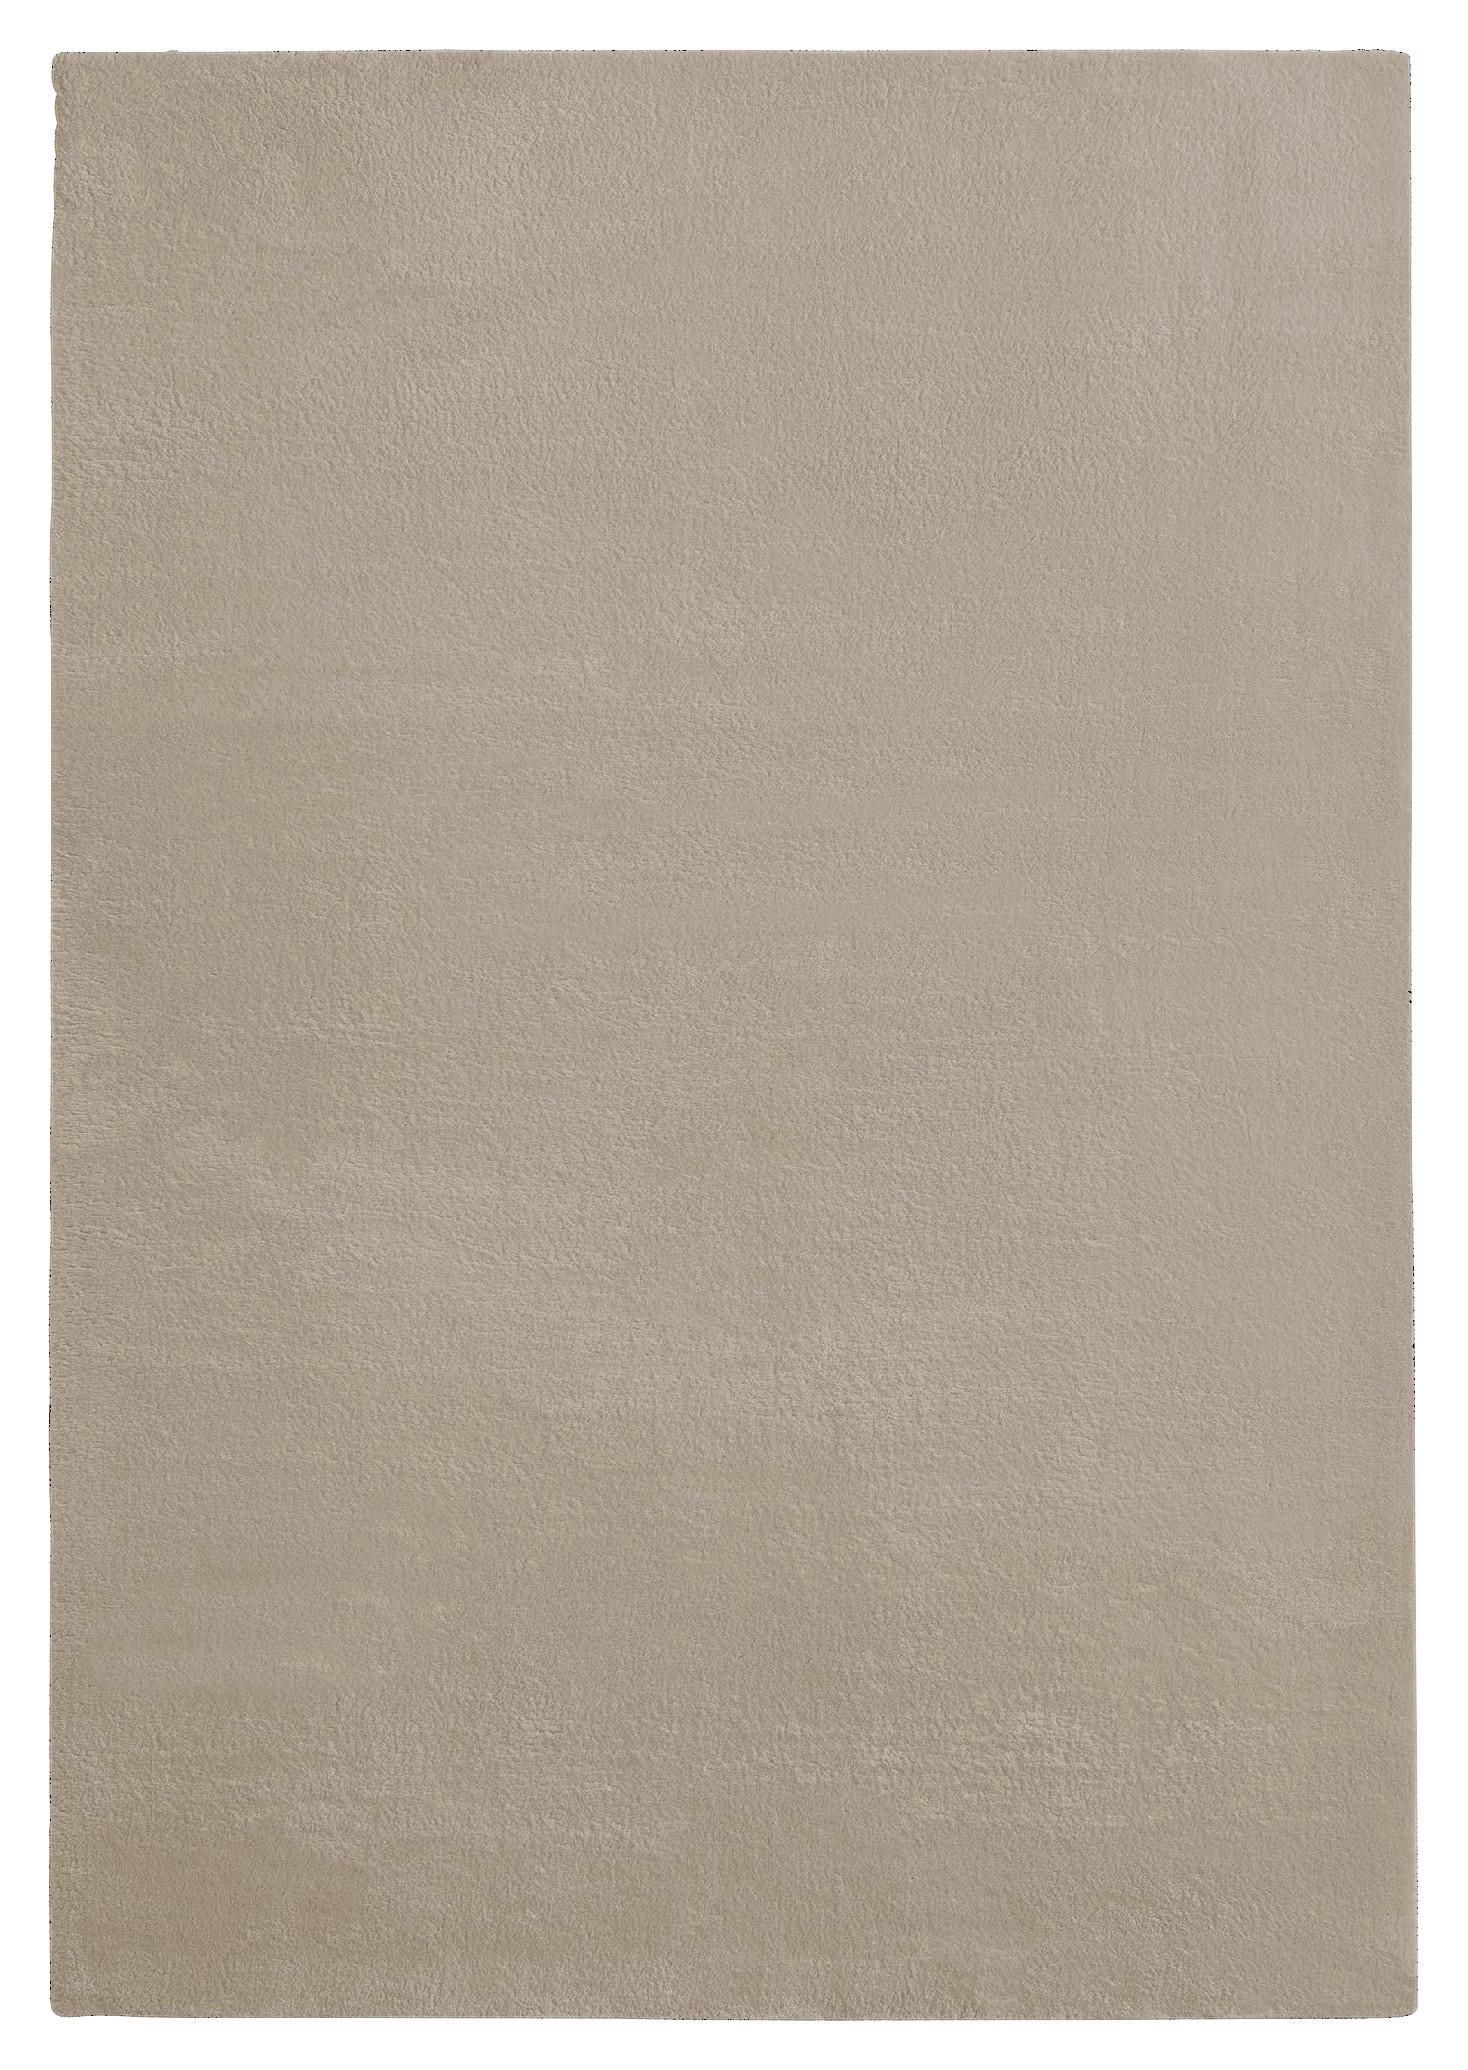 Fellteppich Lisa Sandfarben 160x230 cm - Sandfarben, Basics, Textil (160/230cm) - Luca Bessoni